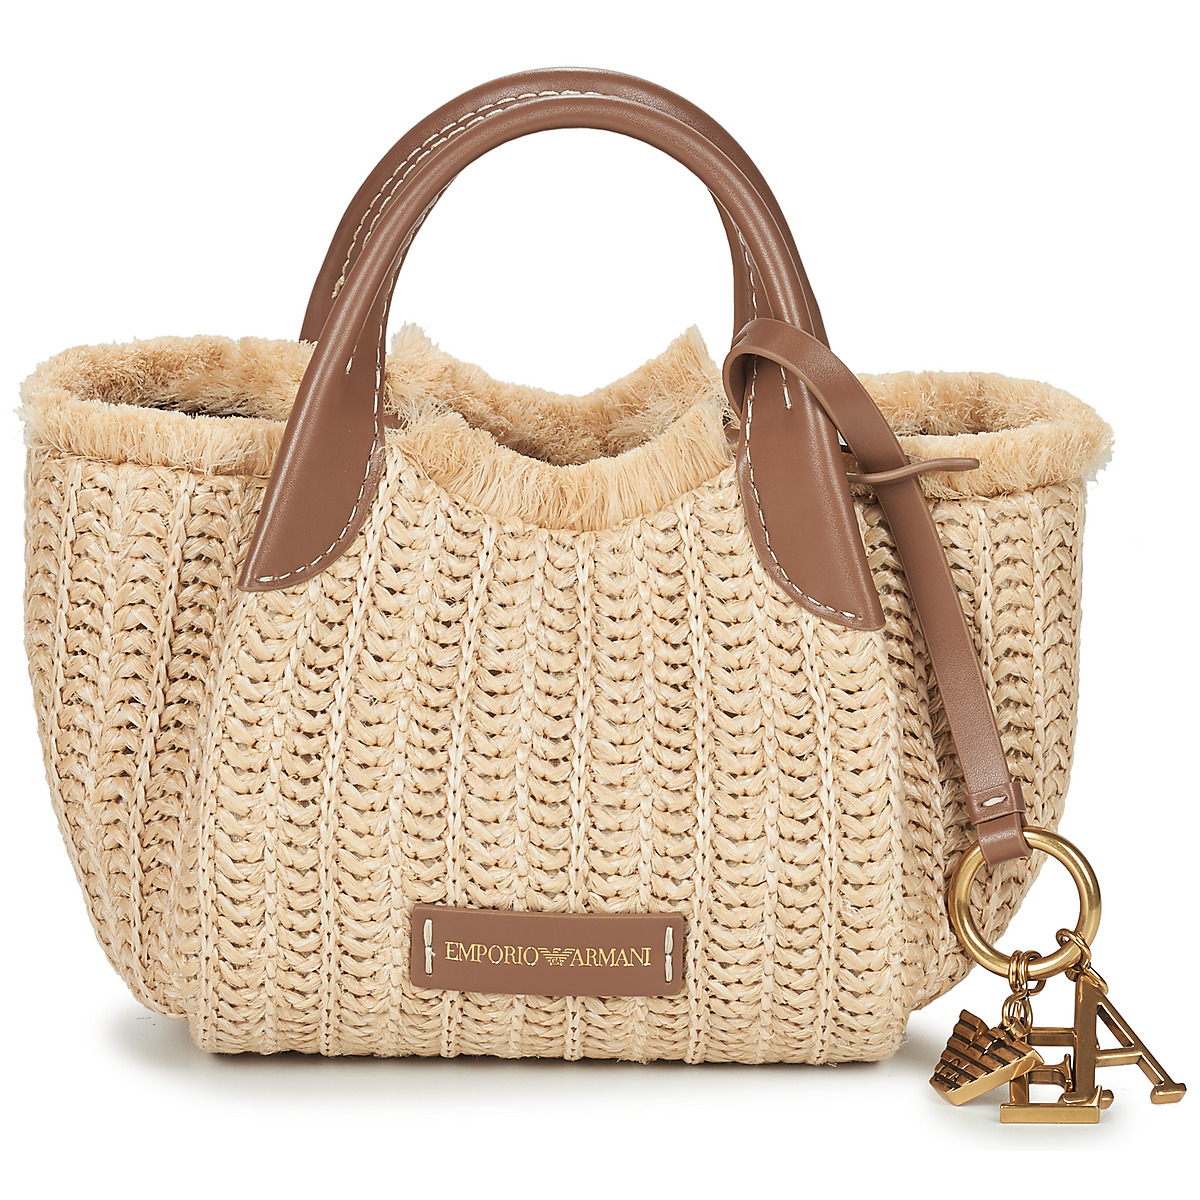 Shopping bag Emporio Armani WOMEN'S SHOPPING BAG L